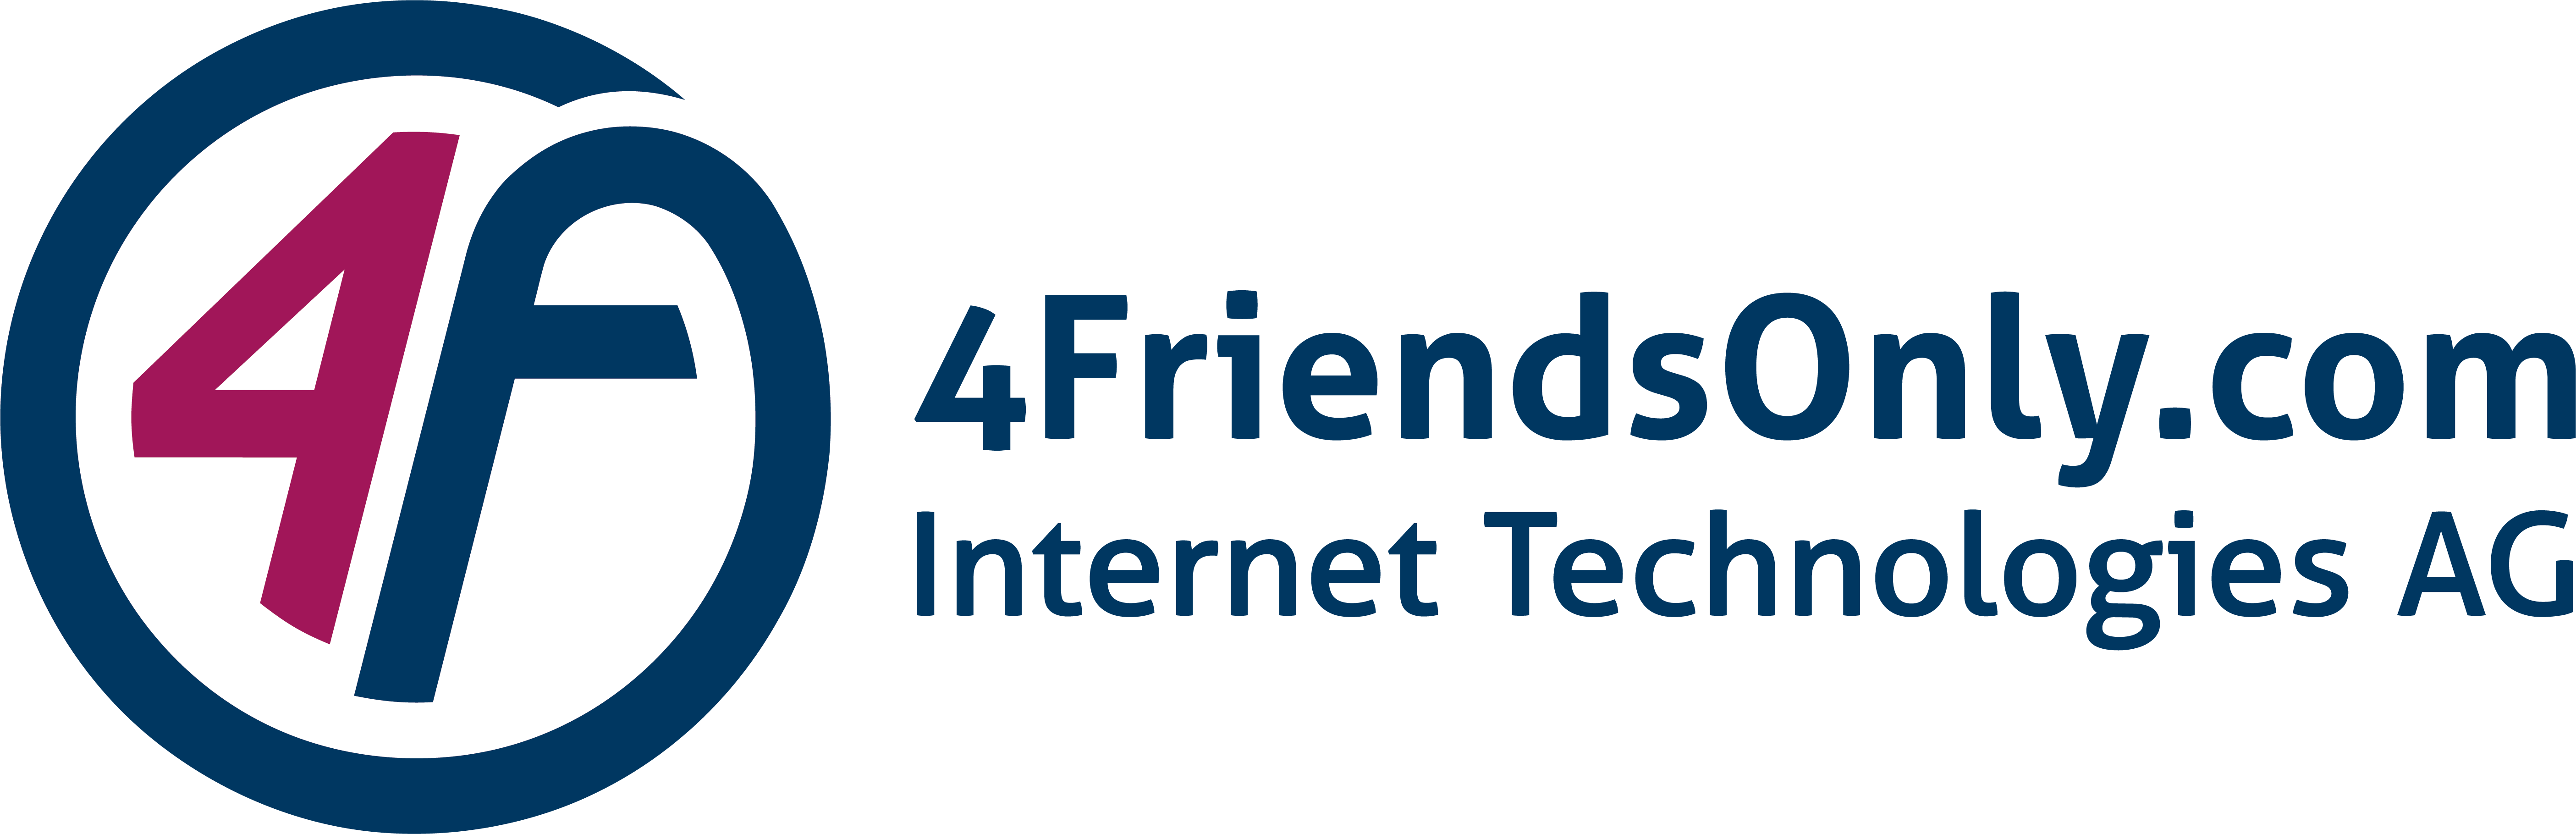 (53) 4FriendsOnly.com Internet Technologies AG